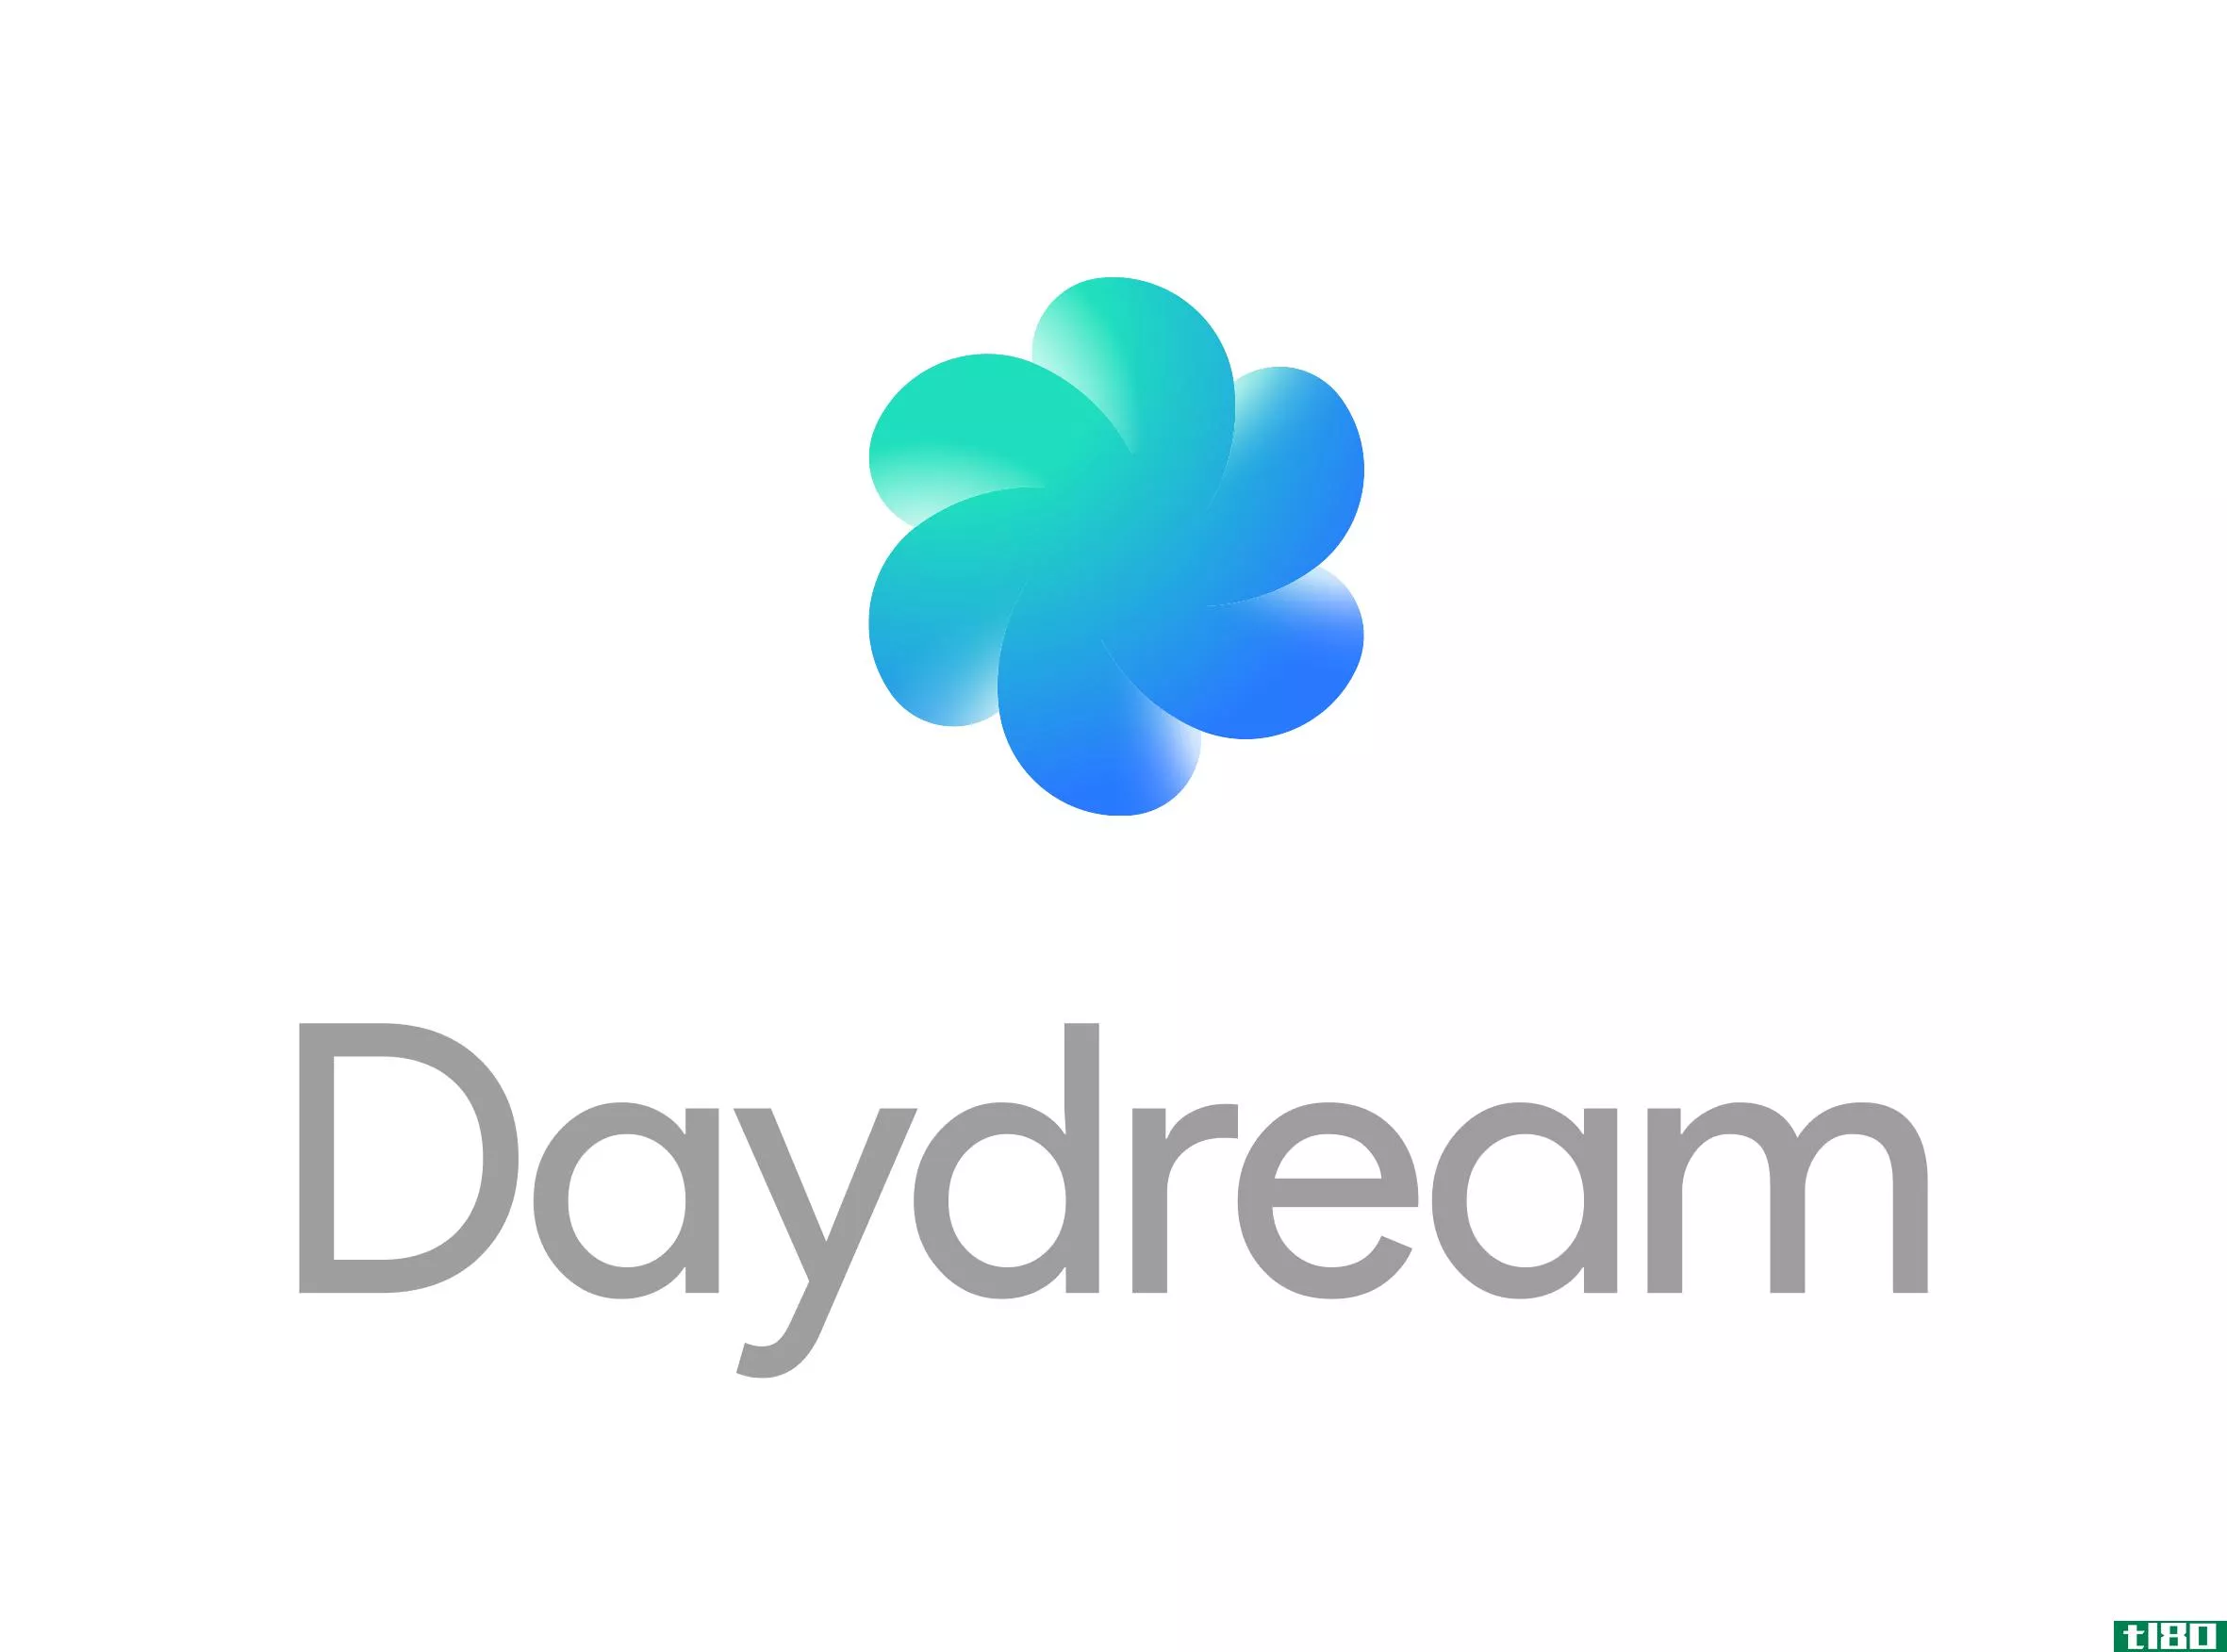 daydream是谷歌的android虚拟现实平台